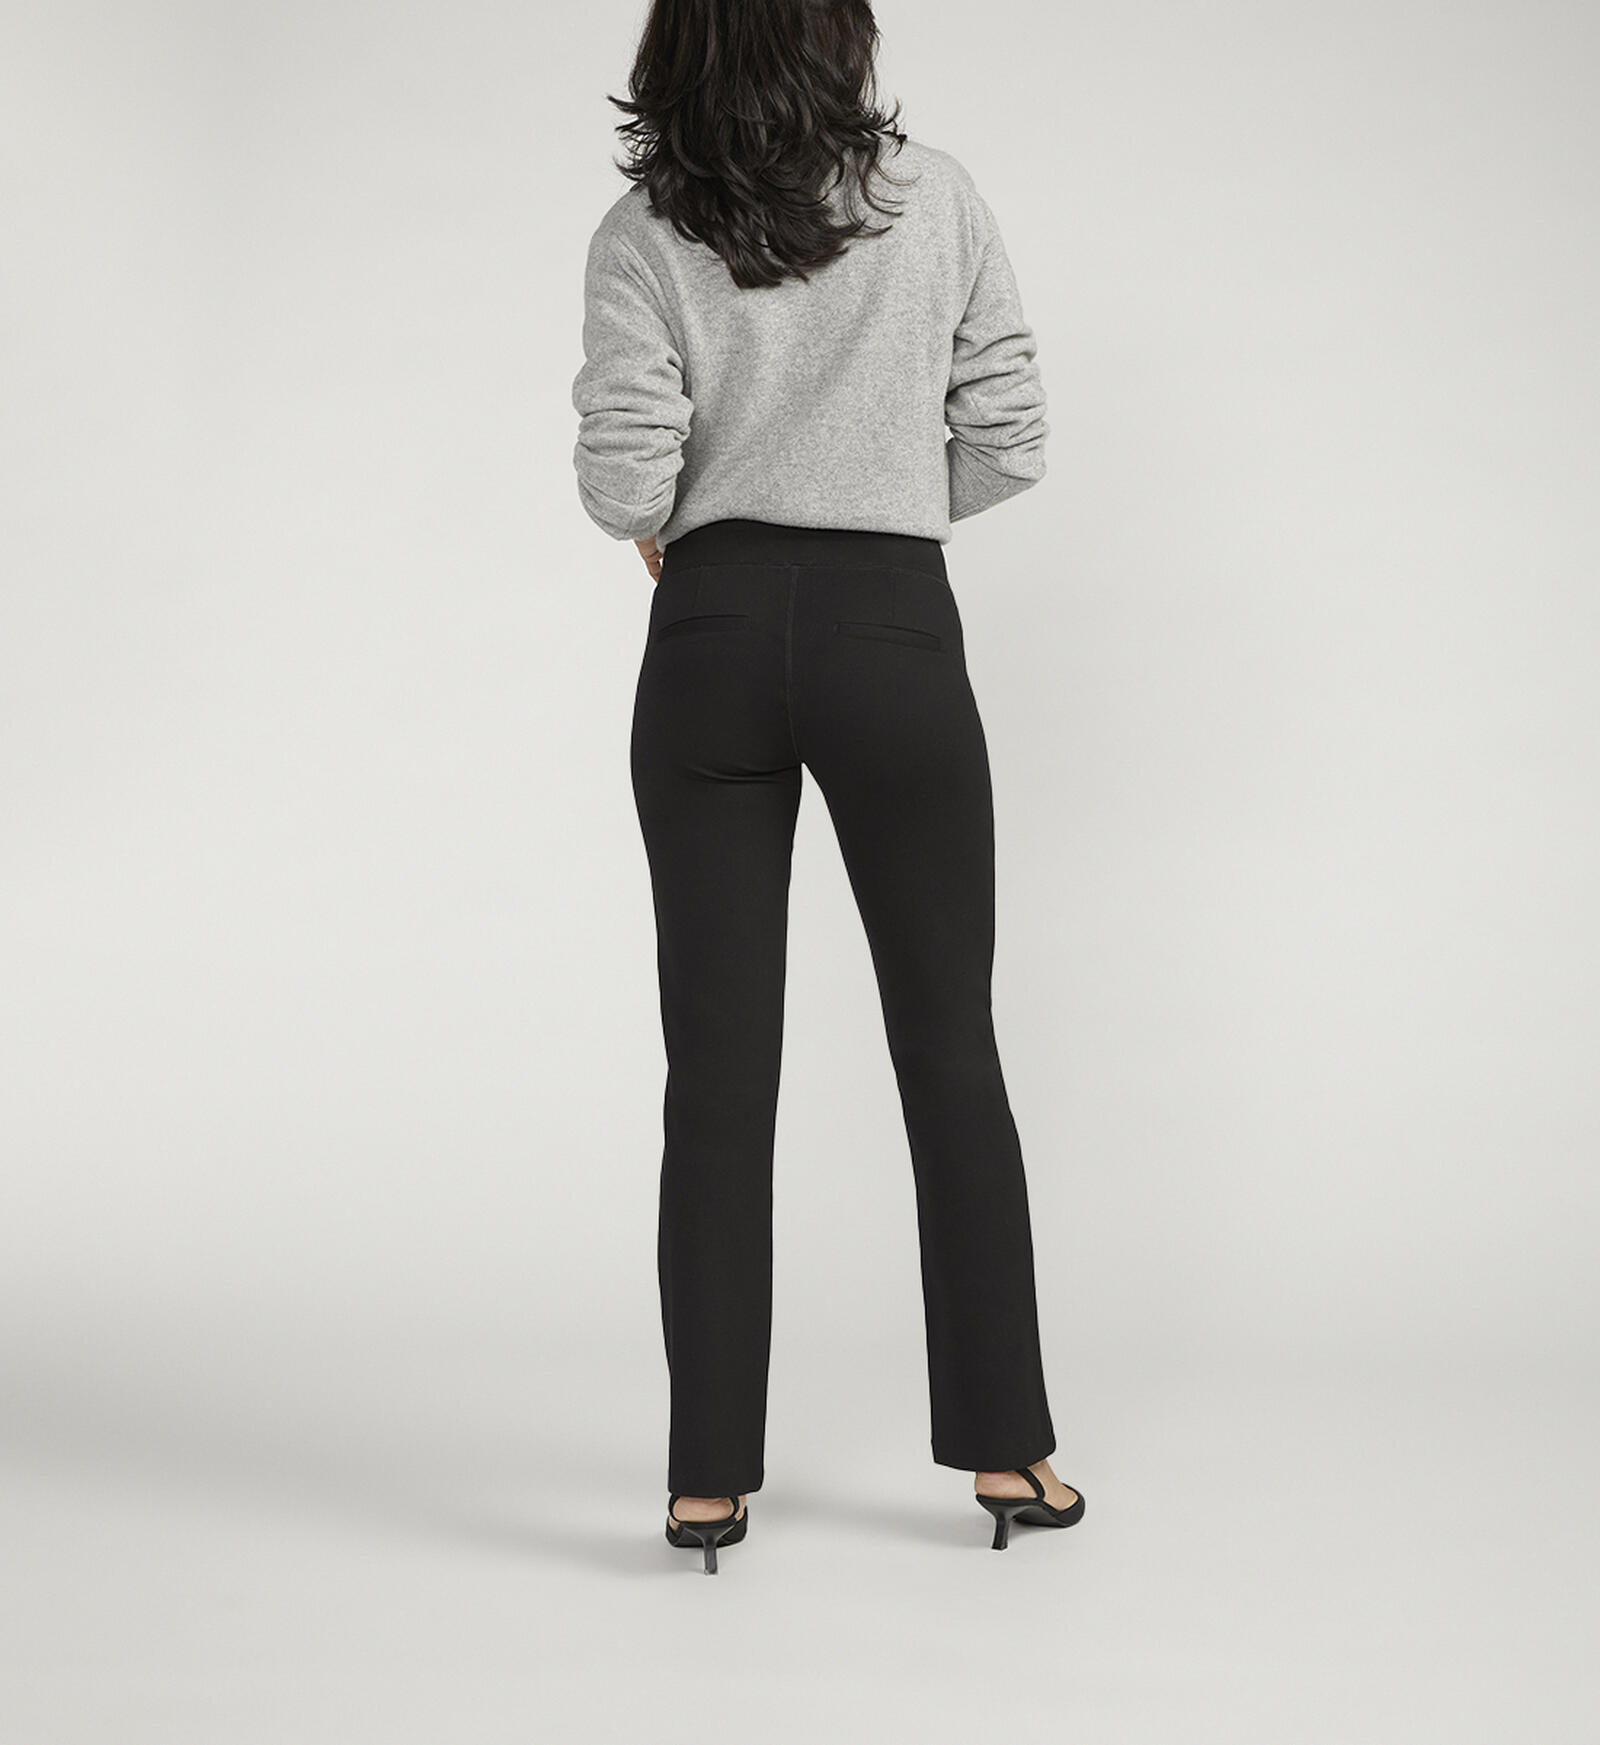 Betabrand Straight-Leg 7-Pocket Dress Pant Yoga - Depop